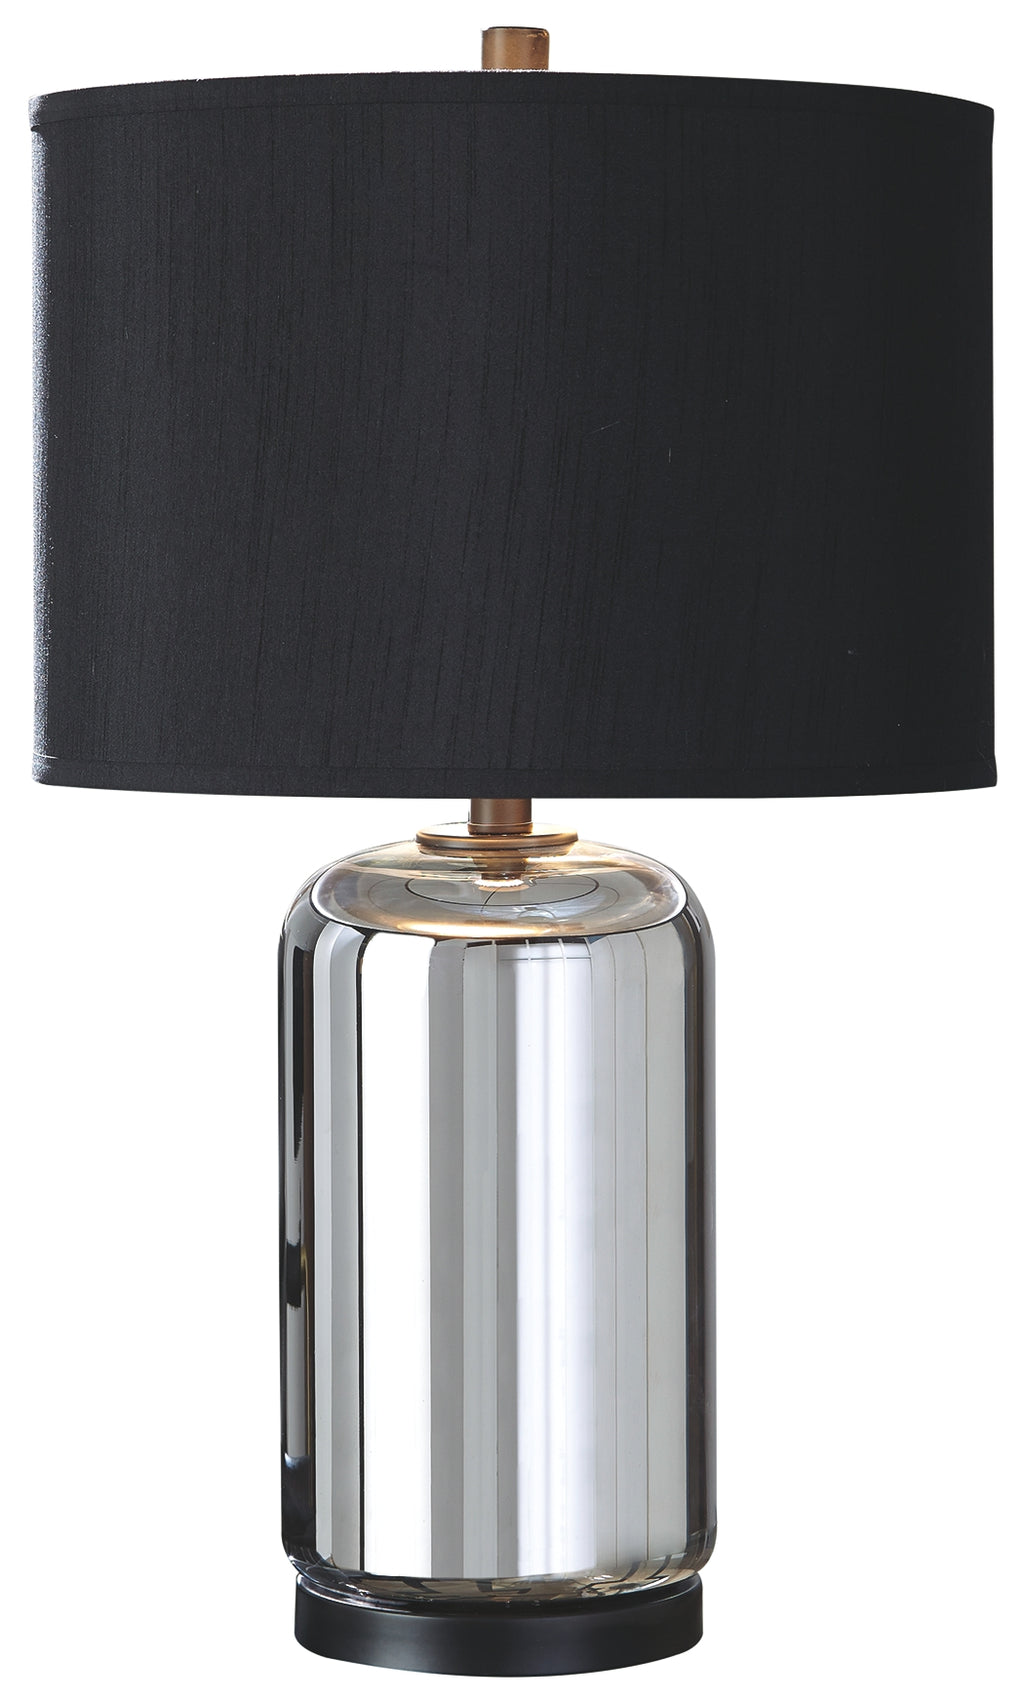 Marinda L430634 Silver Finish Glass Table Lamp 2CN